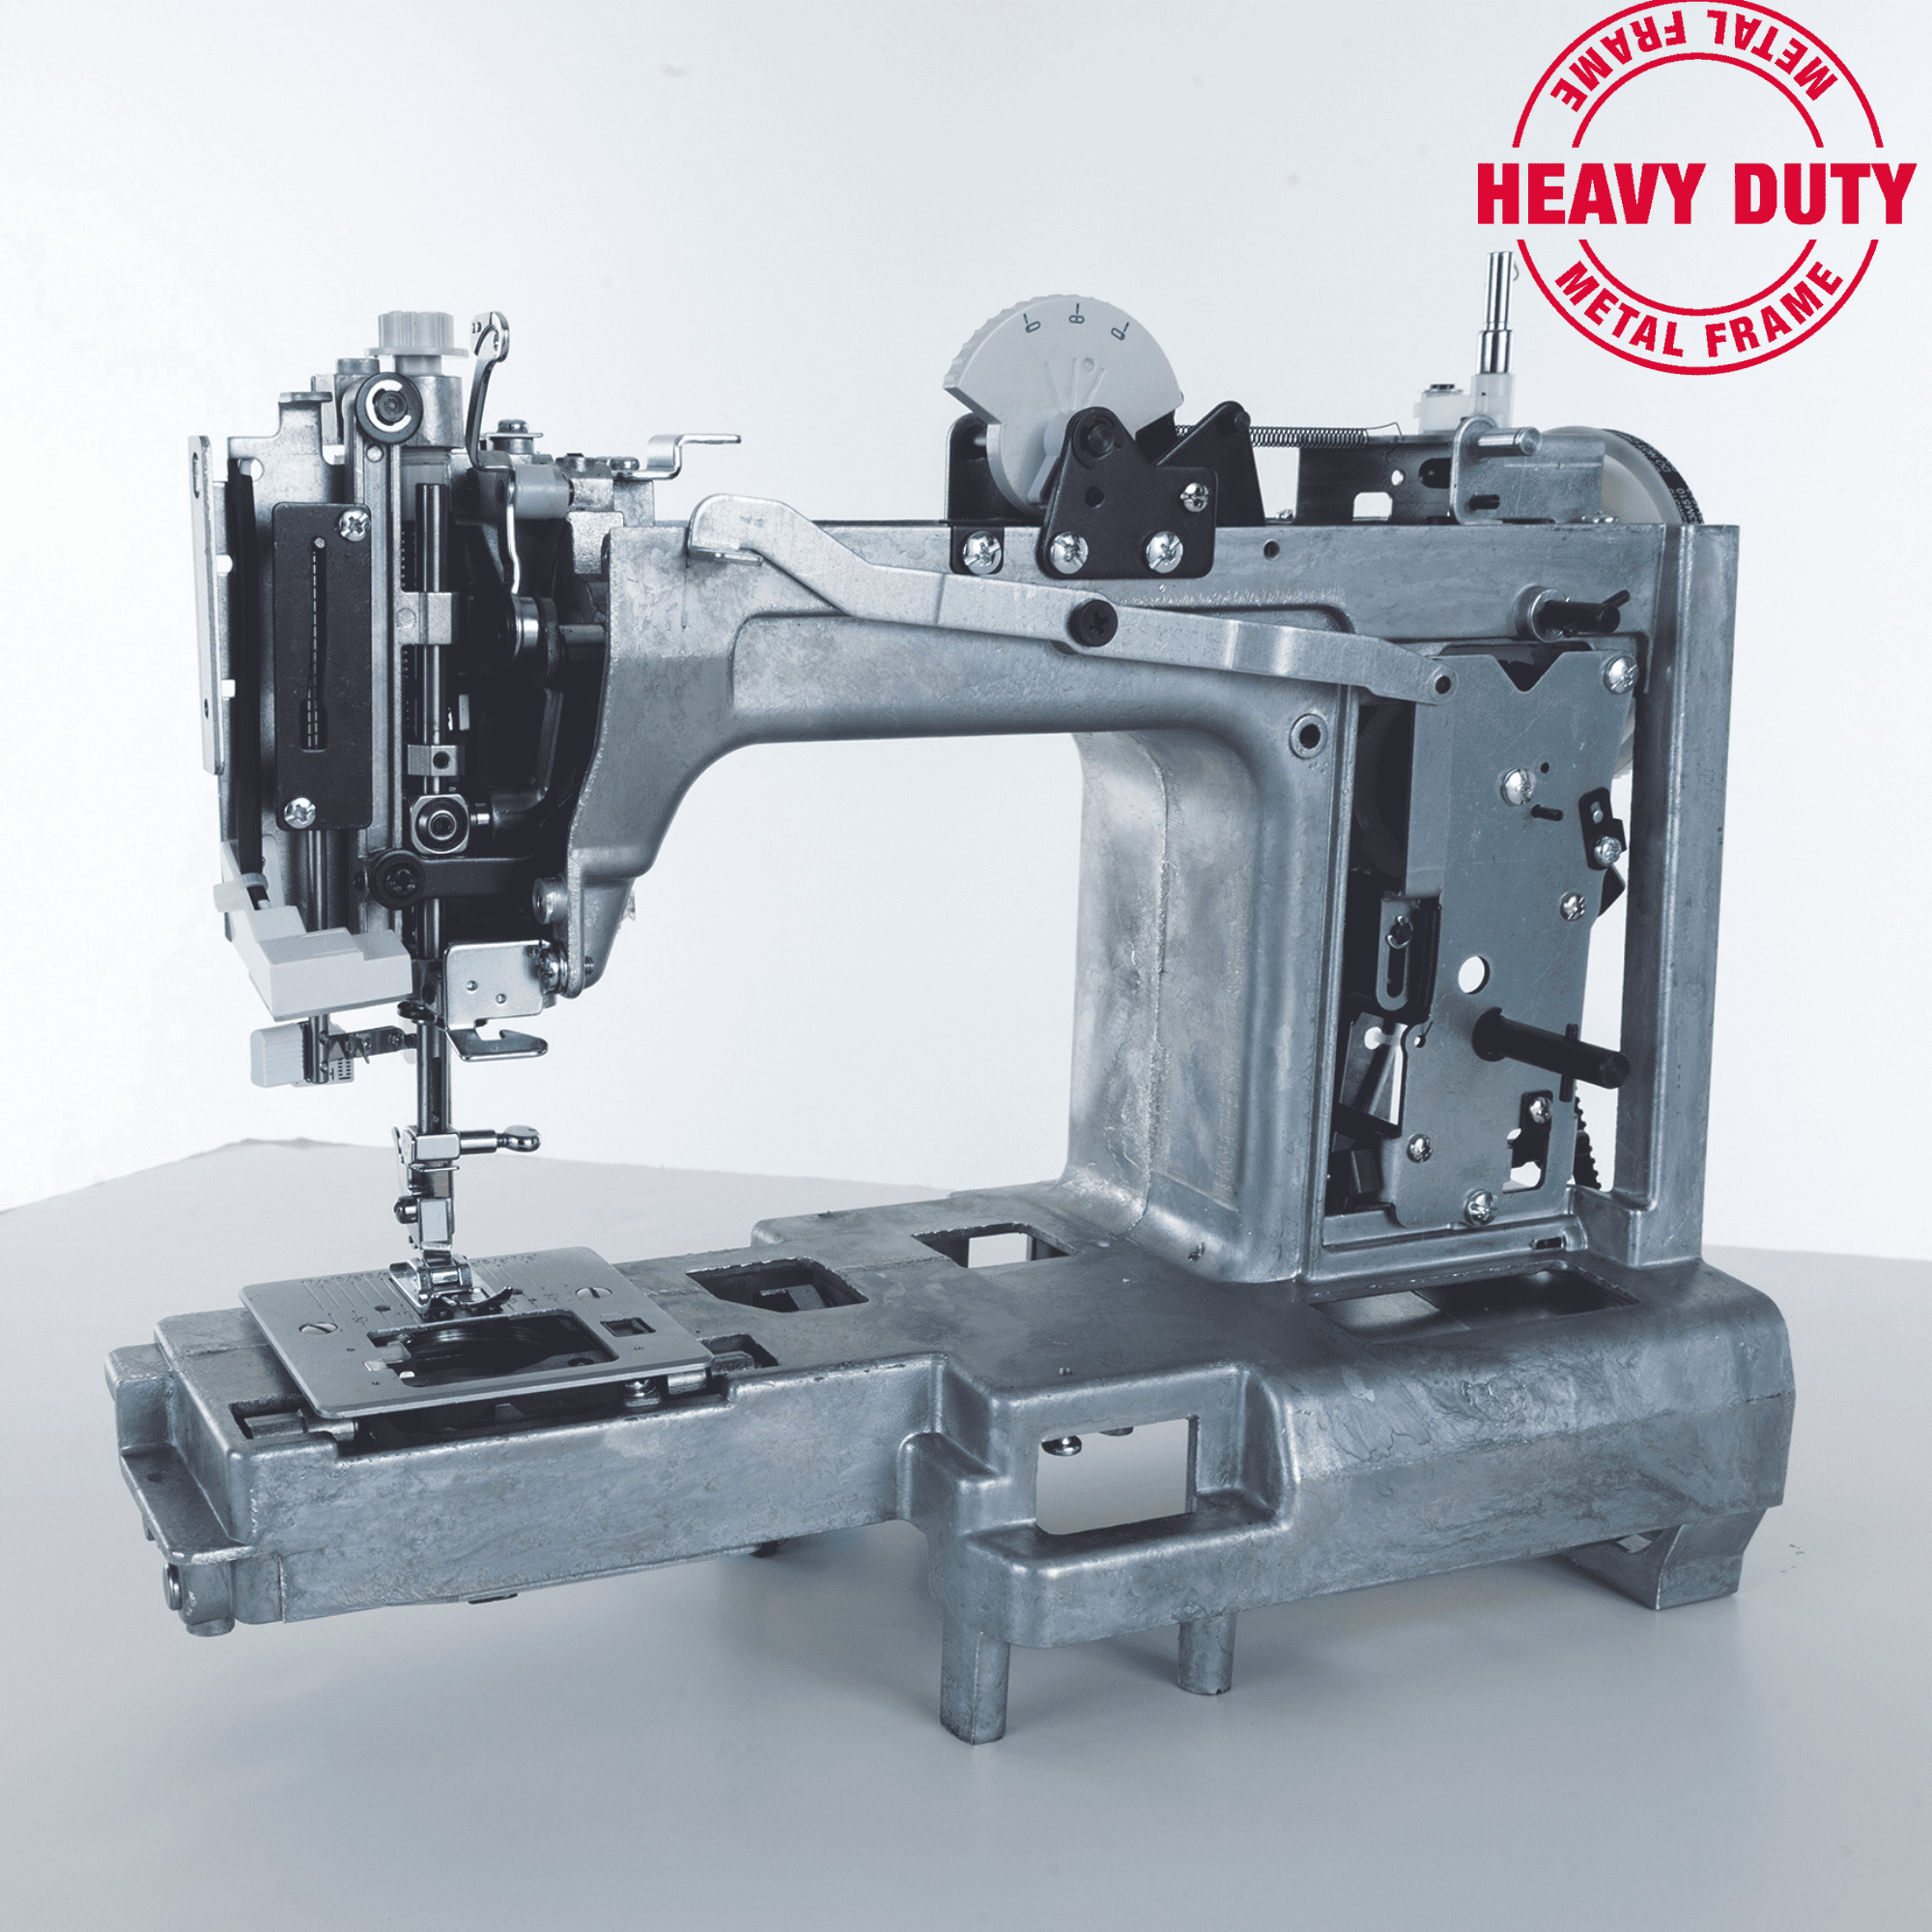 Singer 4432 Heavy Duty Sewing Machine - Black